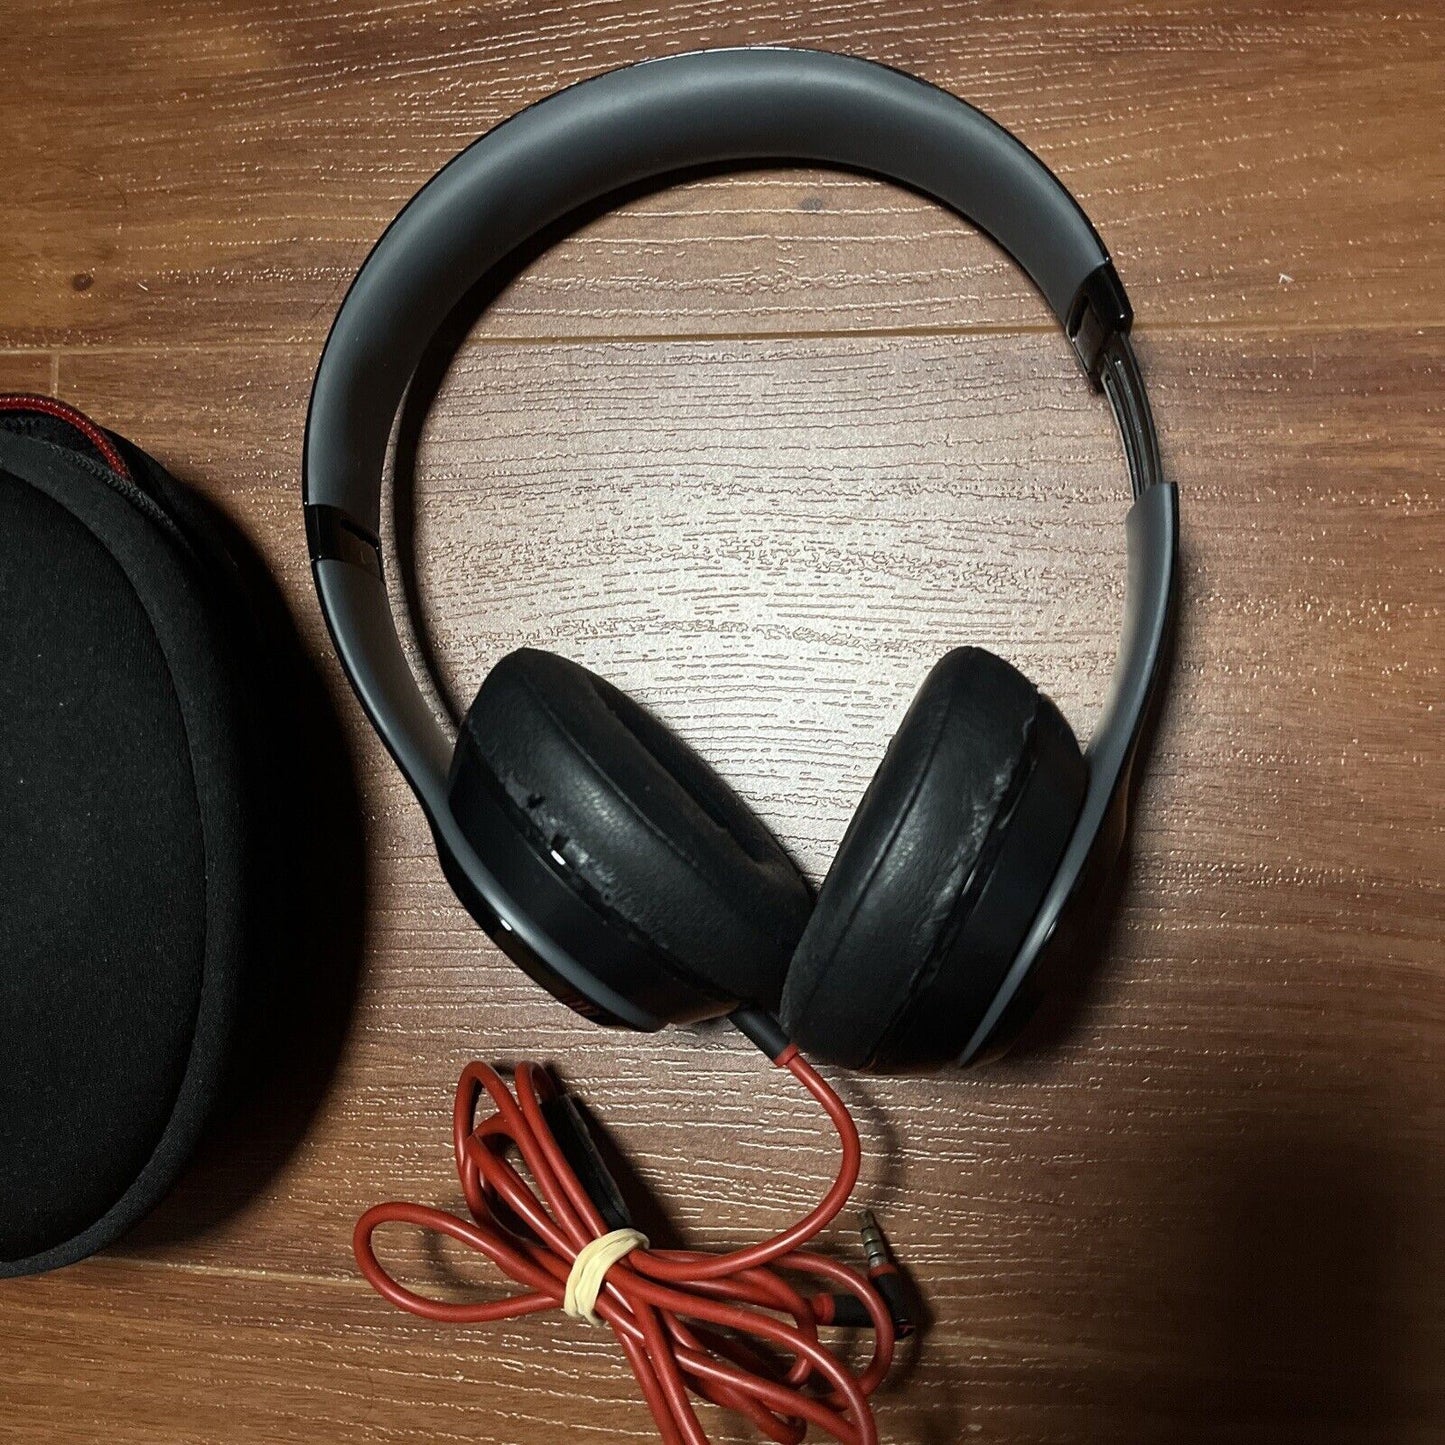 Beats Solo 2 Headphones Model B0518 Wired Black